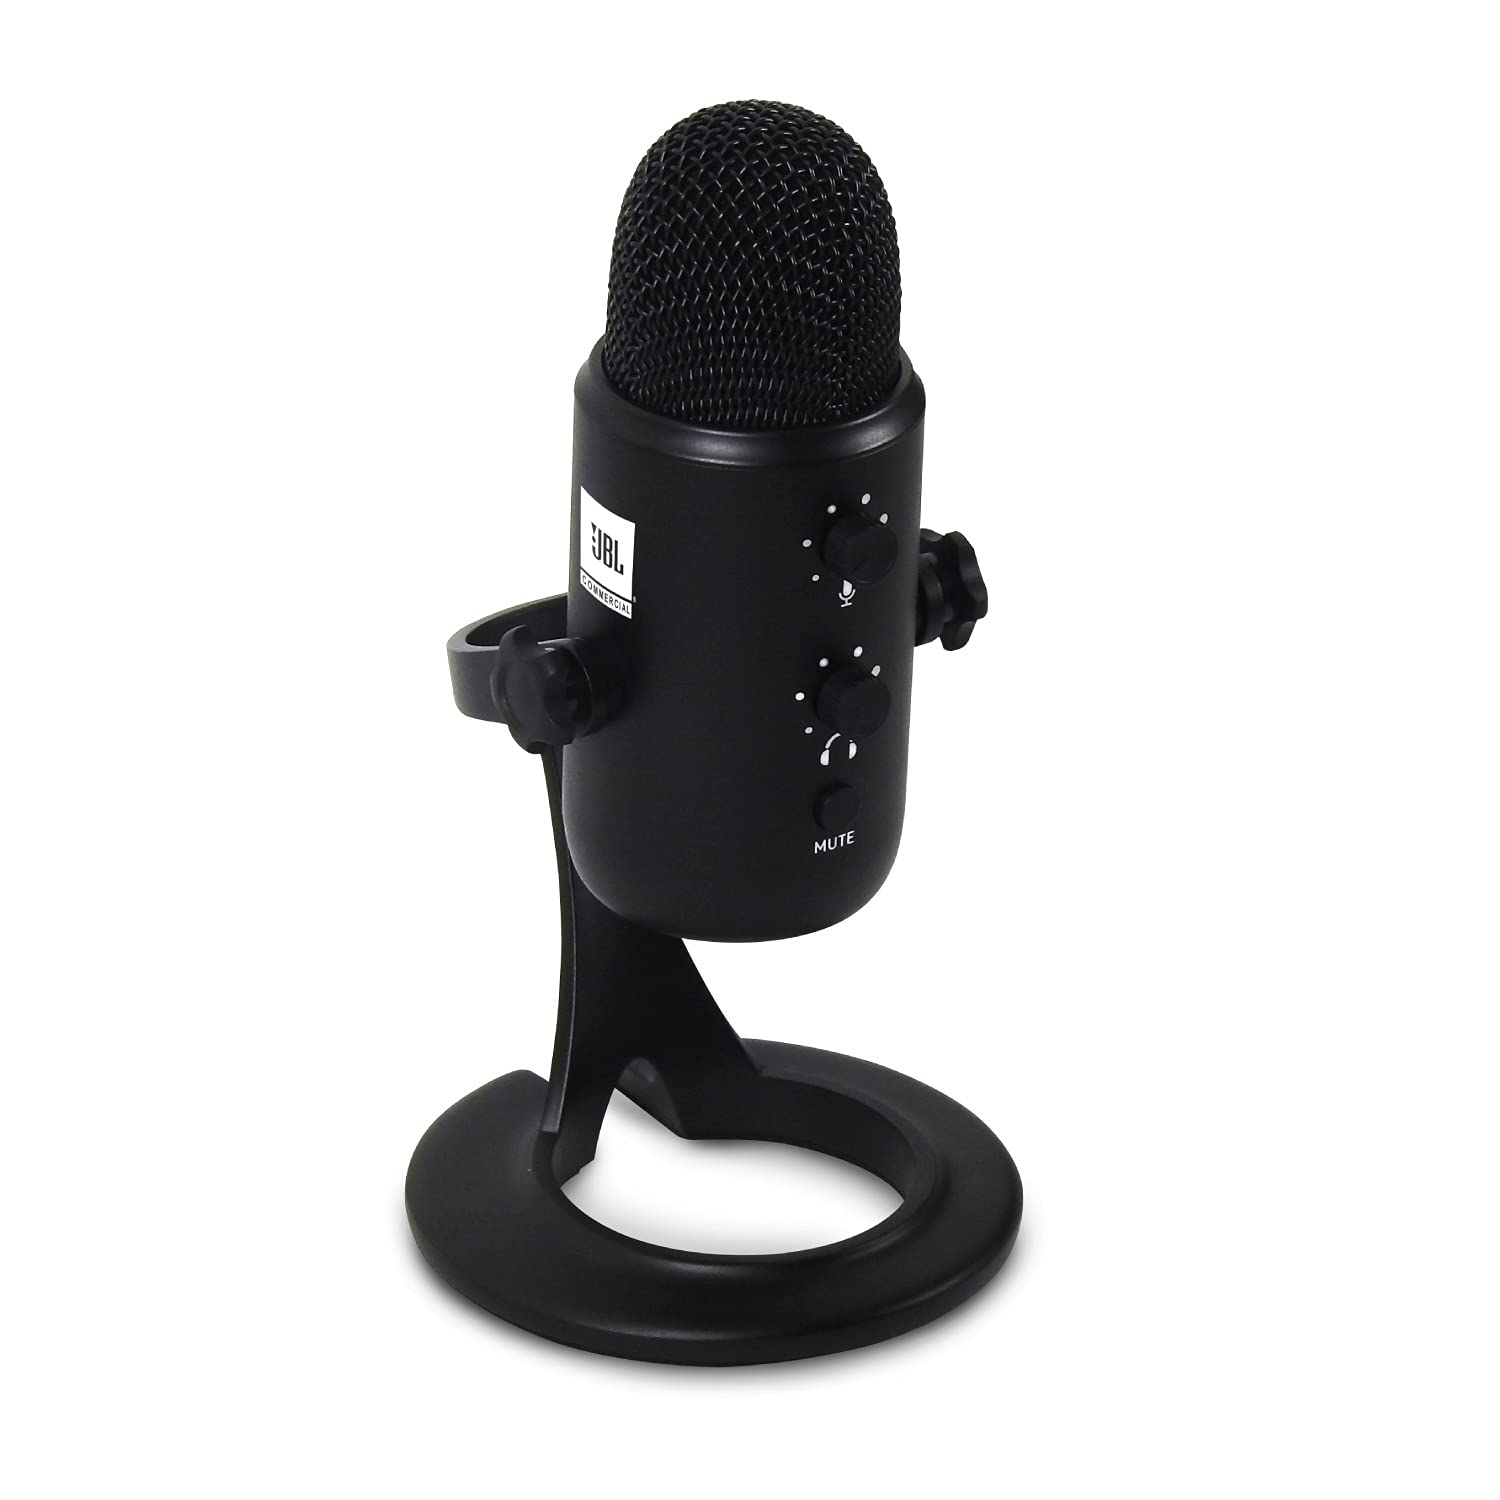 JBL Commercial CSUM10 Compact USB Microphone